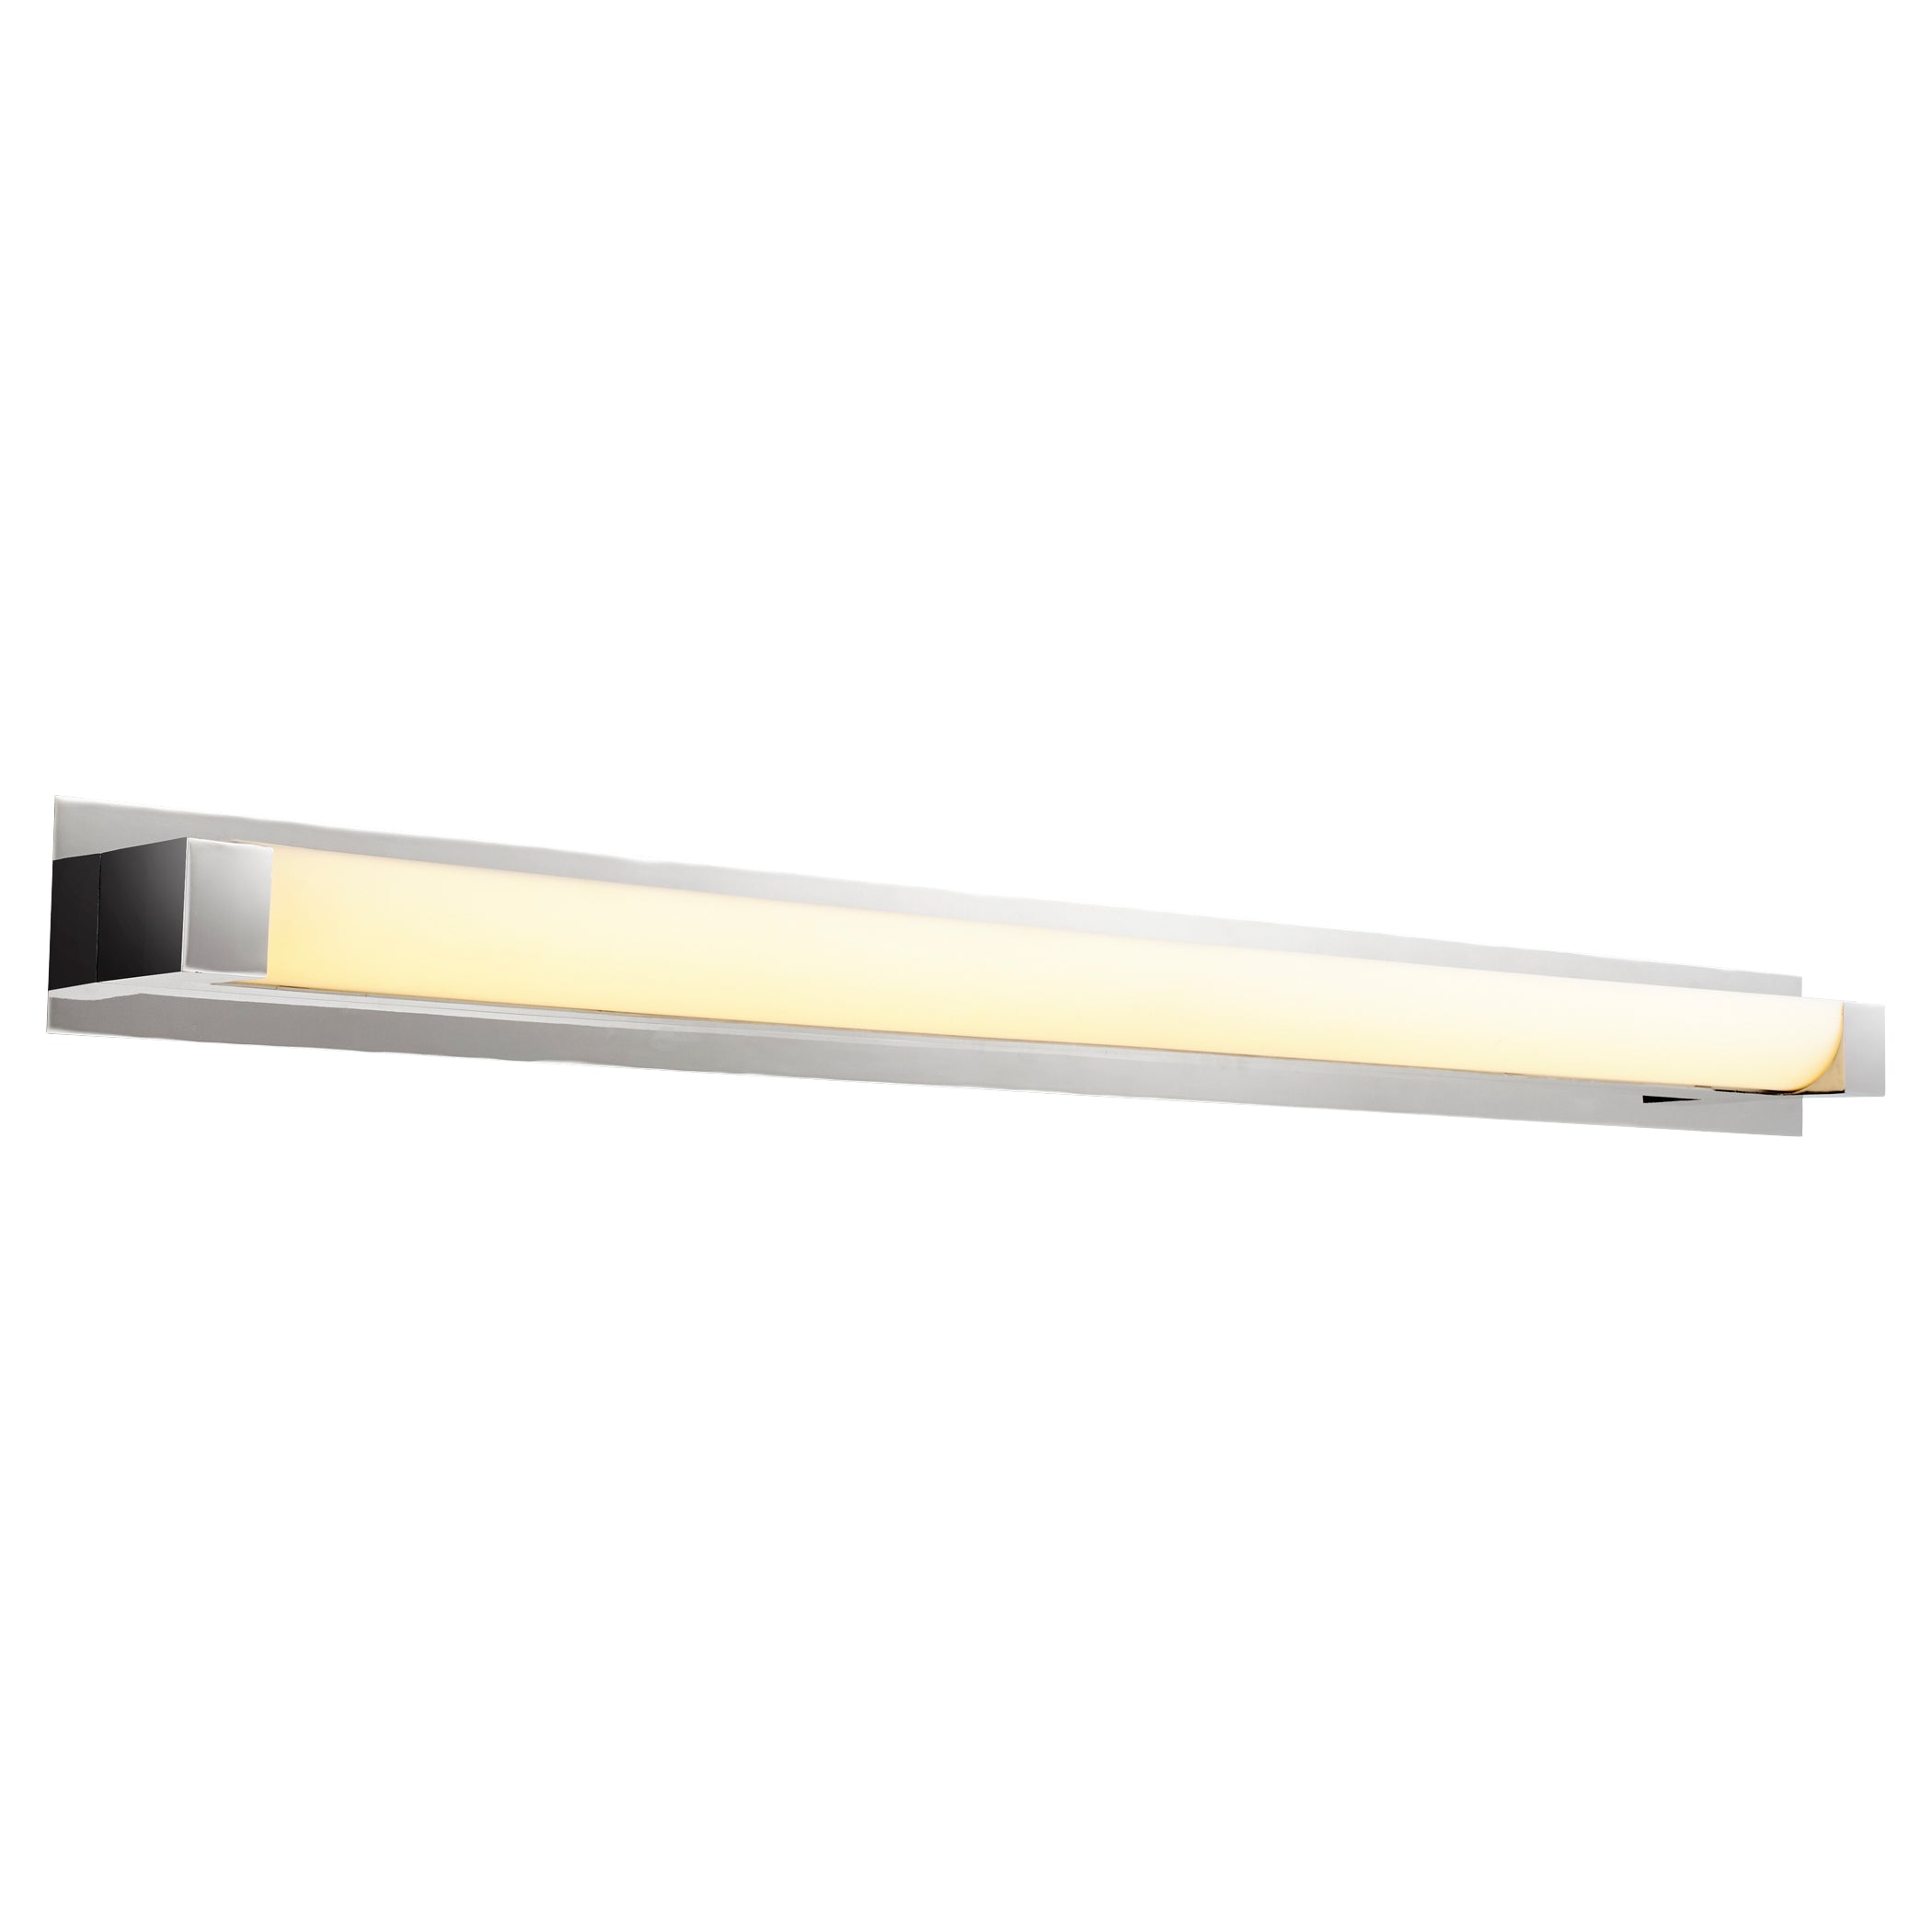 Oxygen Balance 3-549-20 LED Vanity Light 50 Inch 3000K - Polished Nickel